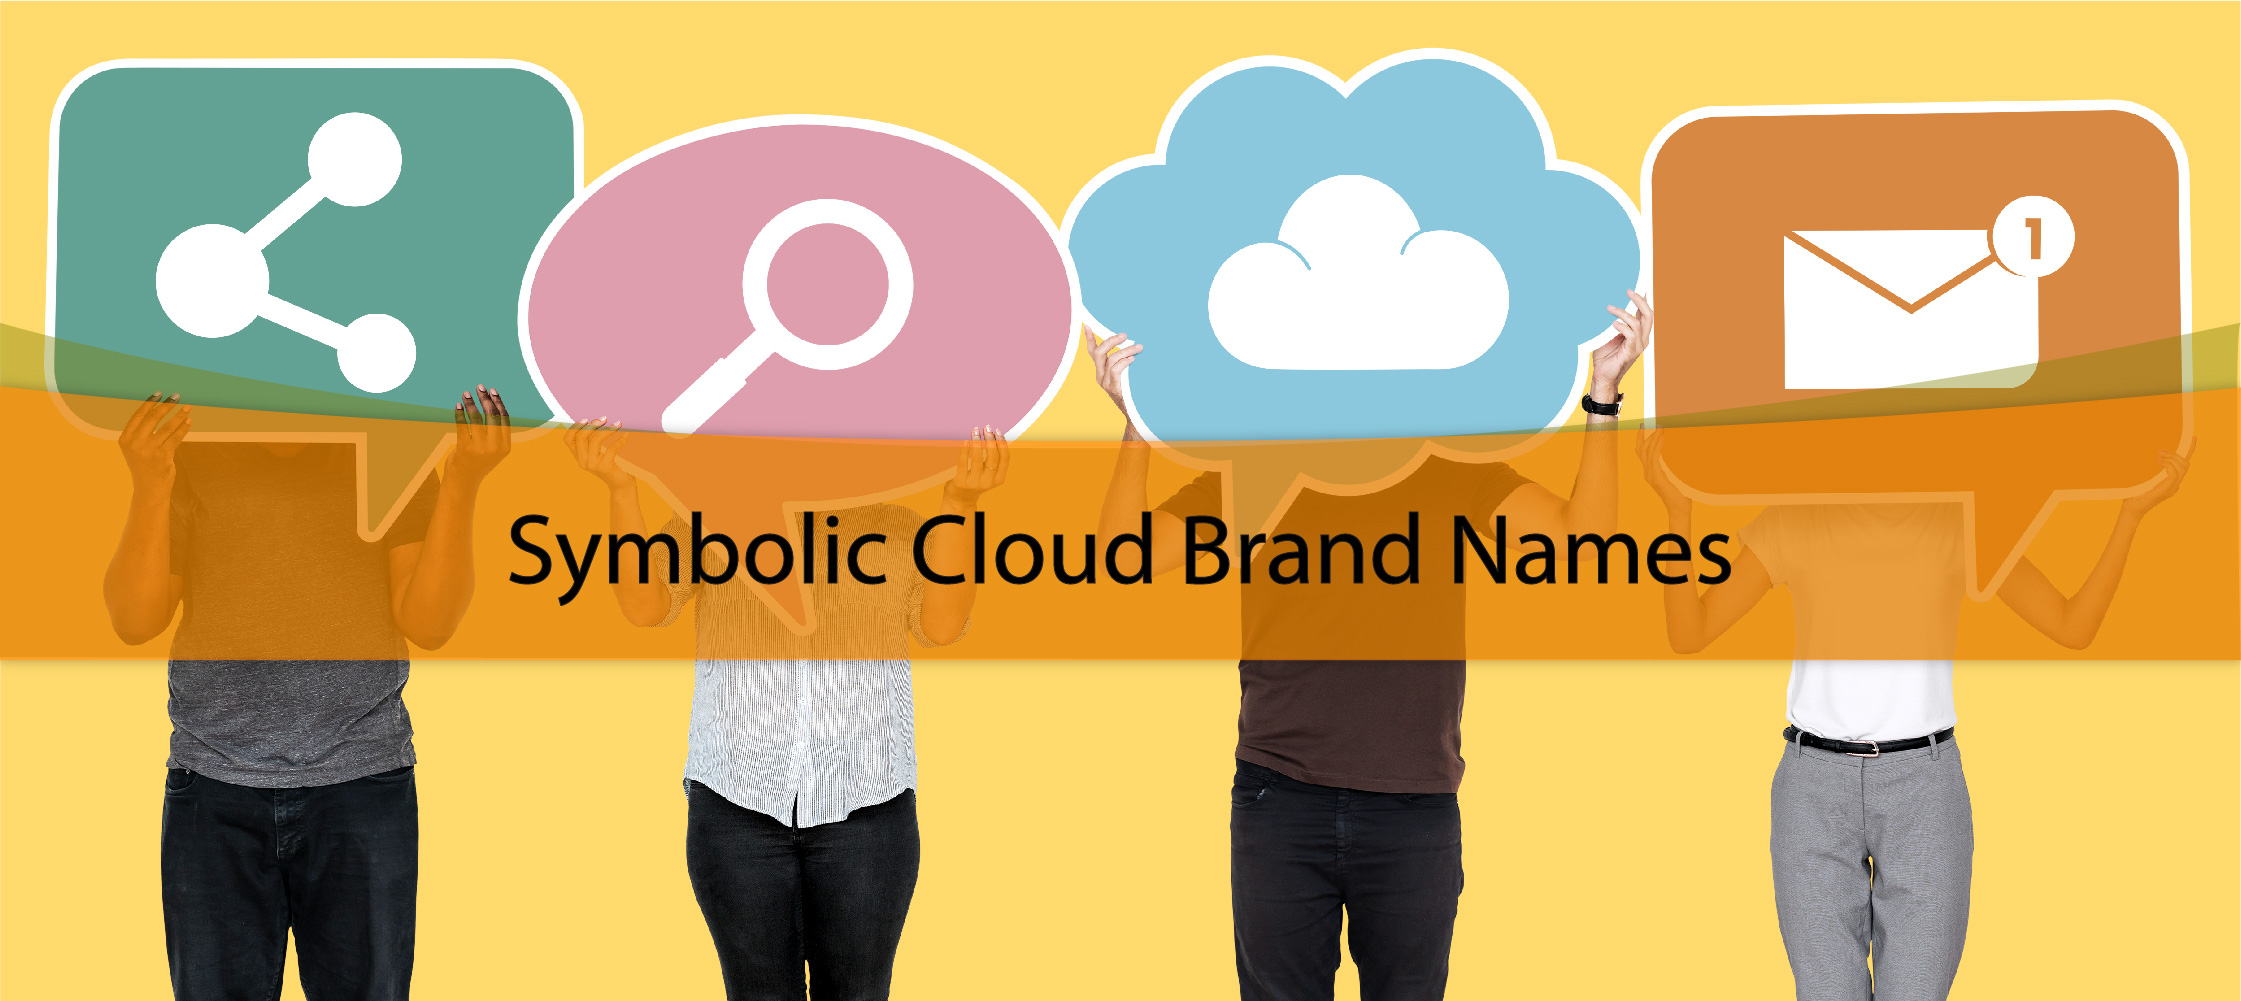 Symbolic Cloud Brand Names